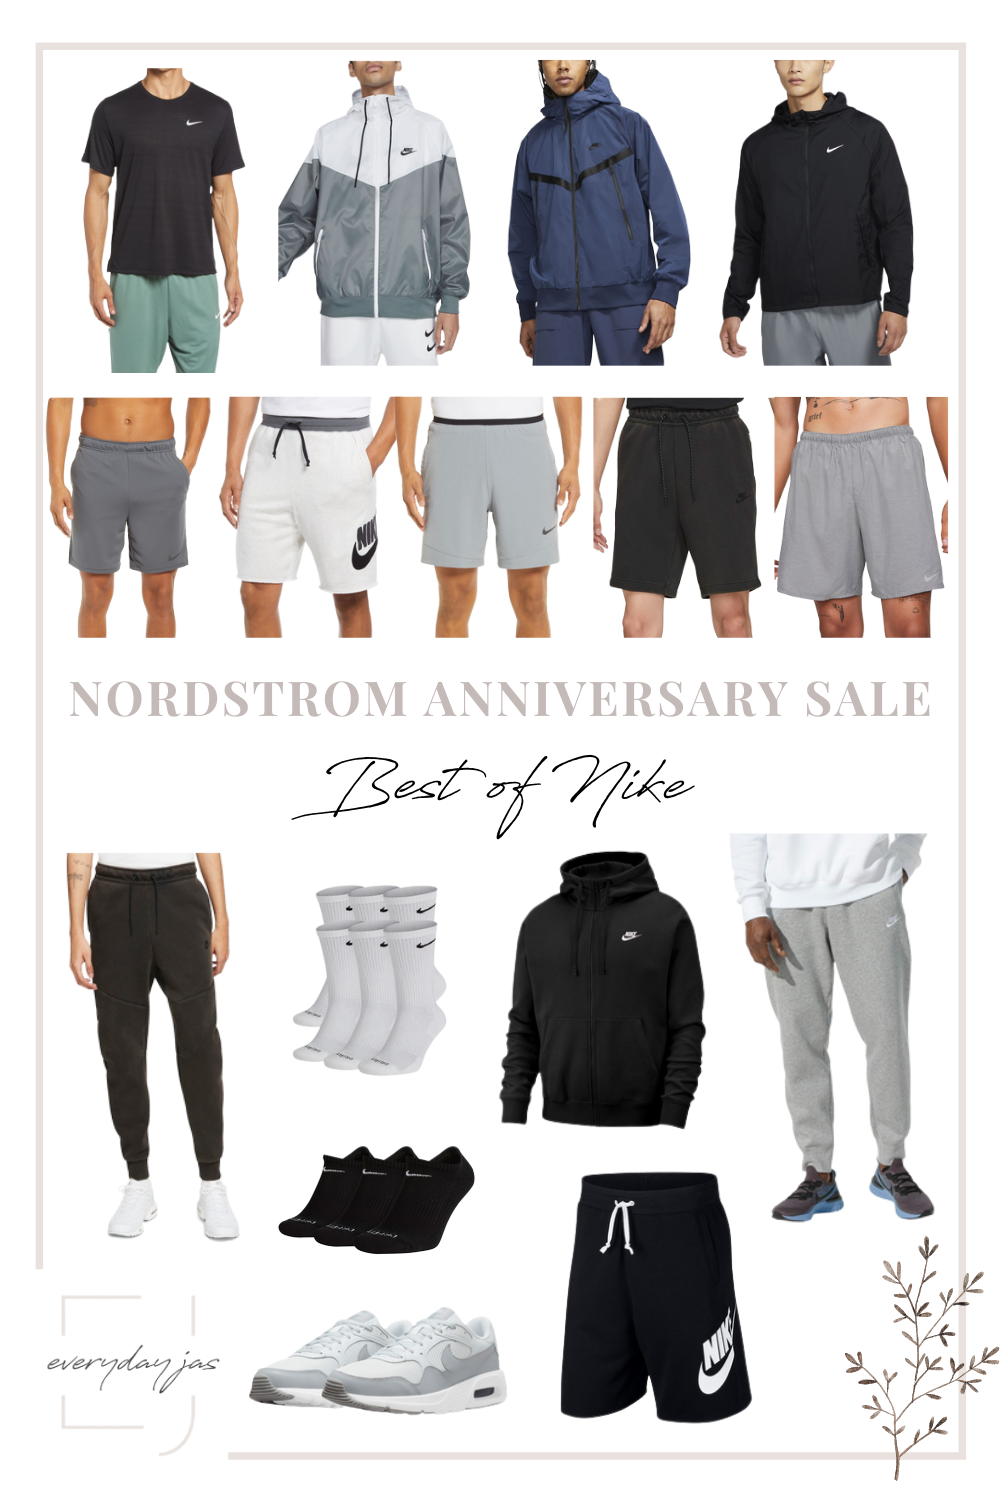 Men’s Nordstrom Anniversary Sale best of nike